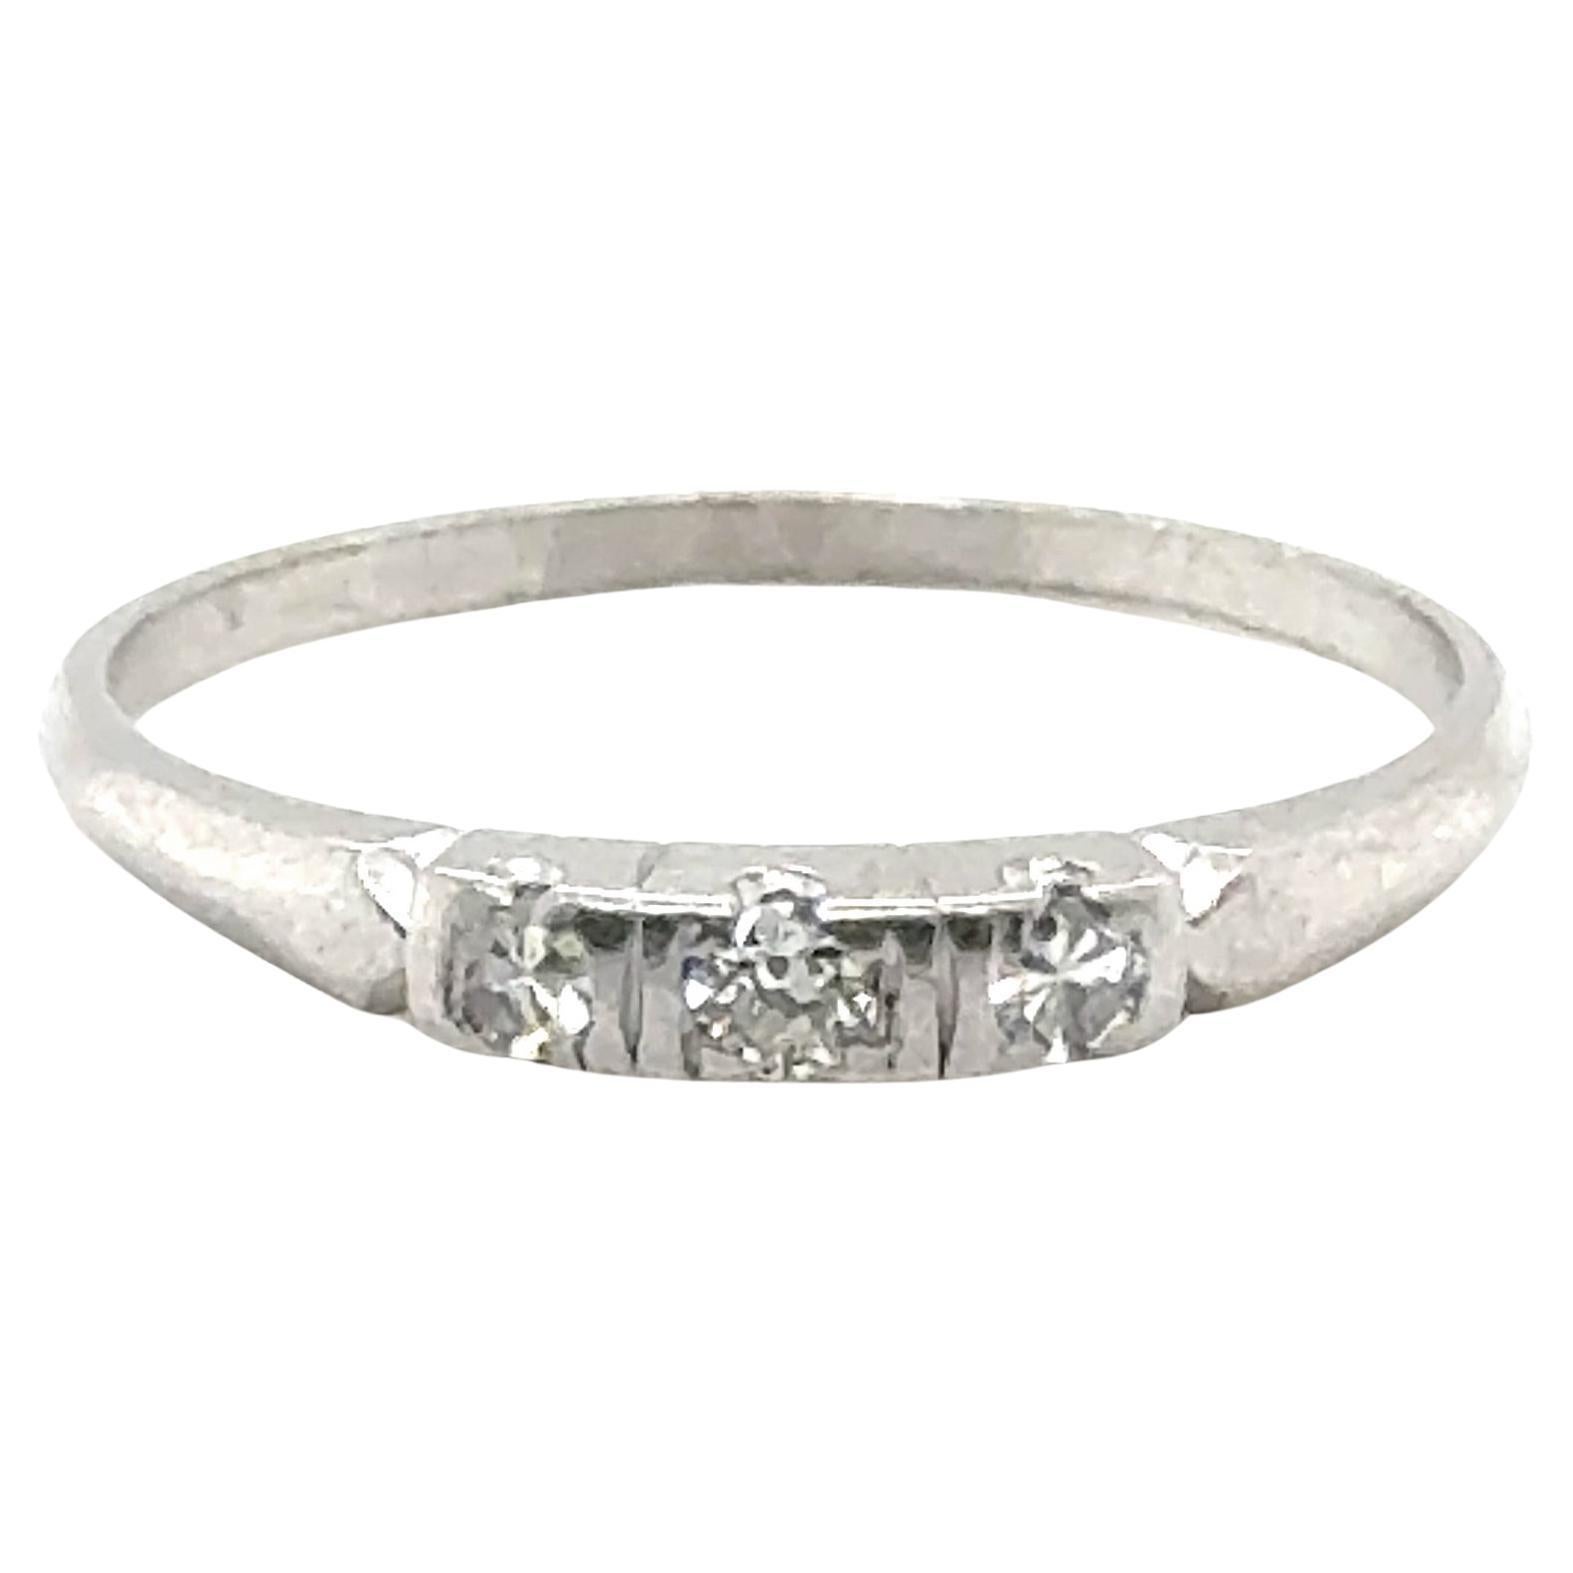 Art Deco Diamond Wedding Band Anniversary Ring Mined Original 1930's Platinum